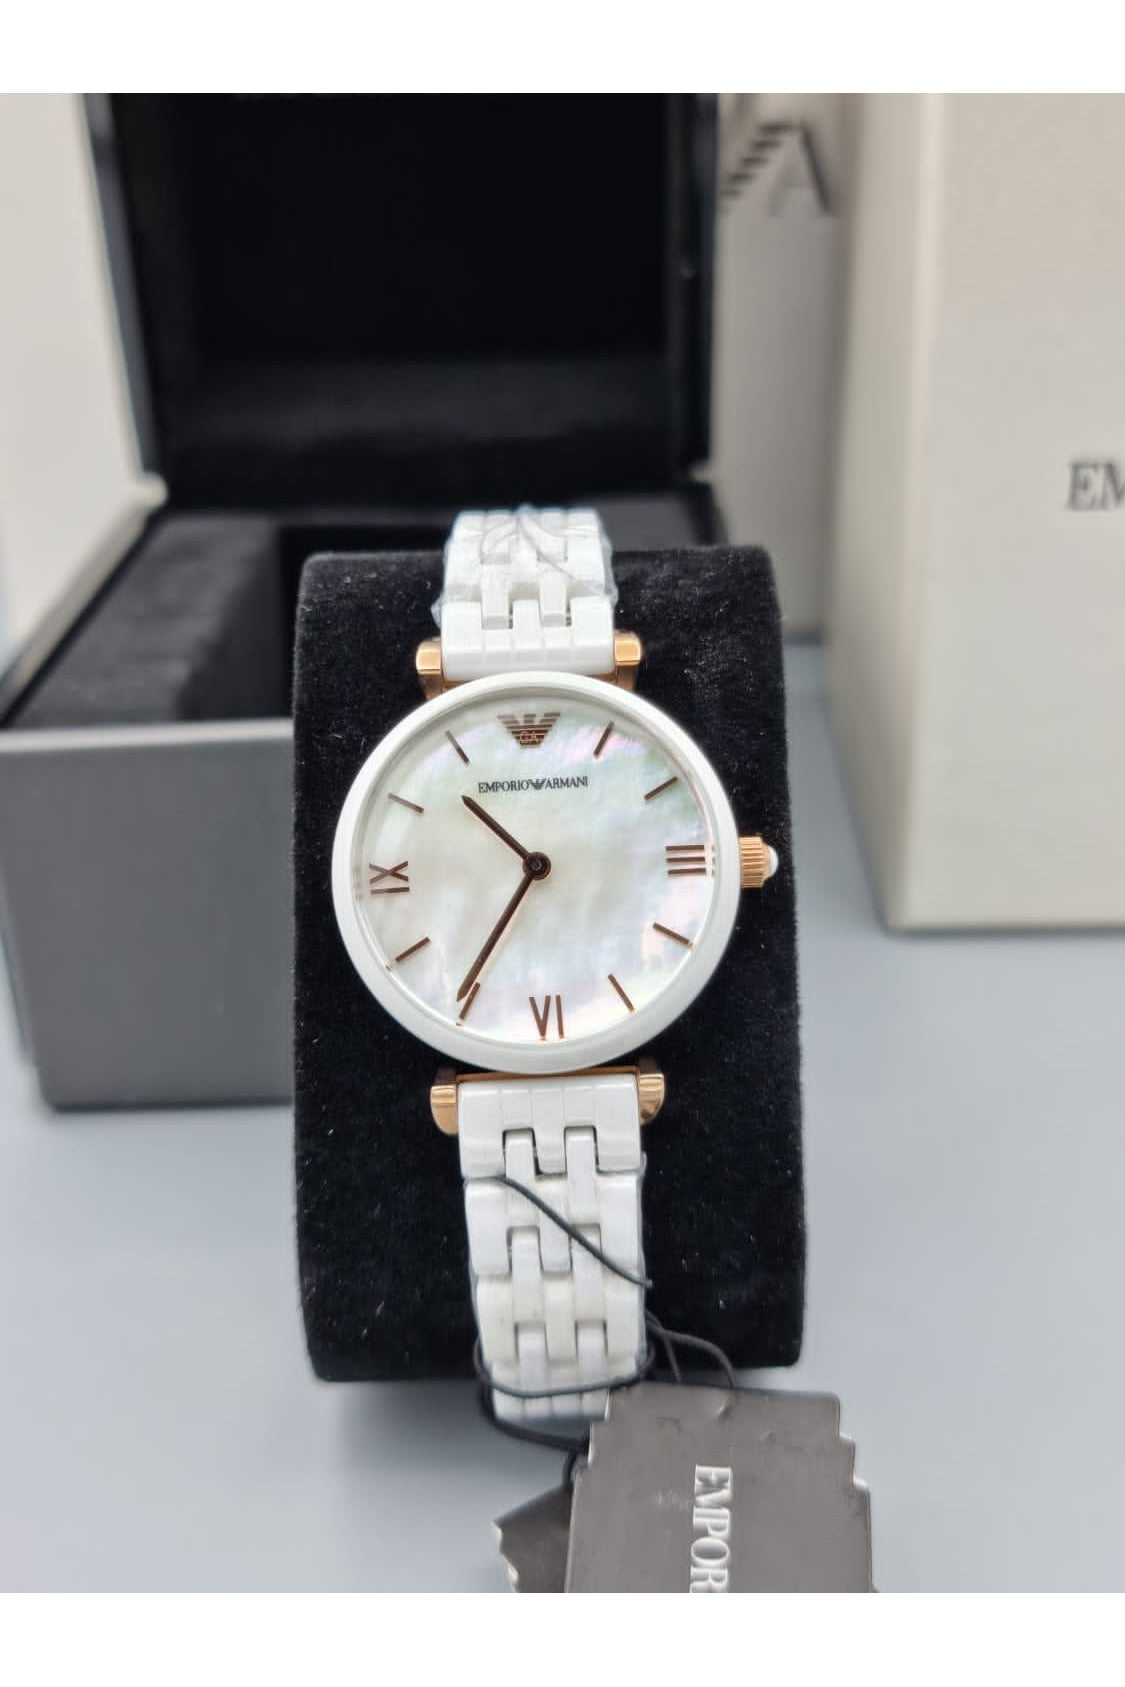 Buy Emporio Armani Retro White Ceramic Mother of Pearl Dial Quartz Watch for Ladies - Emporio Armani AR1486 in Pakistan